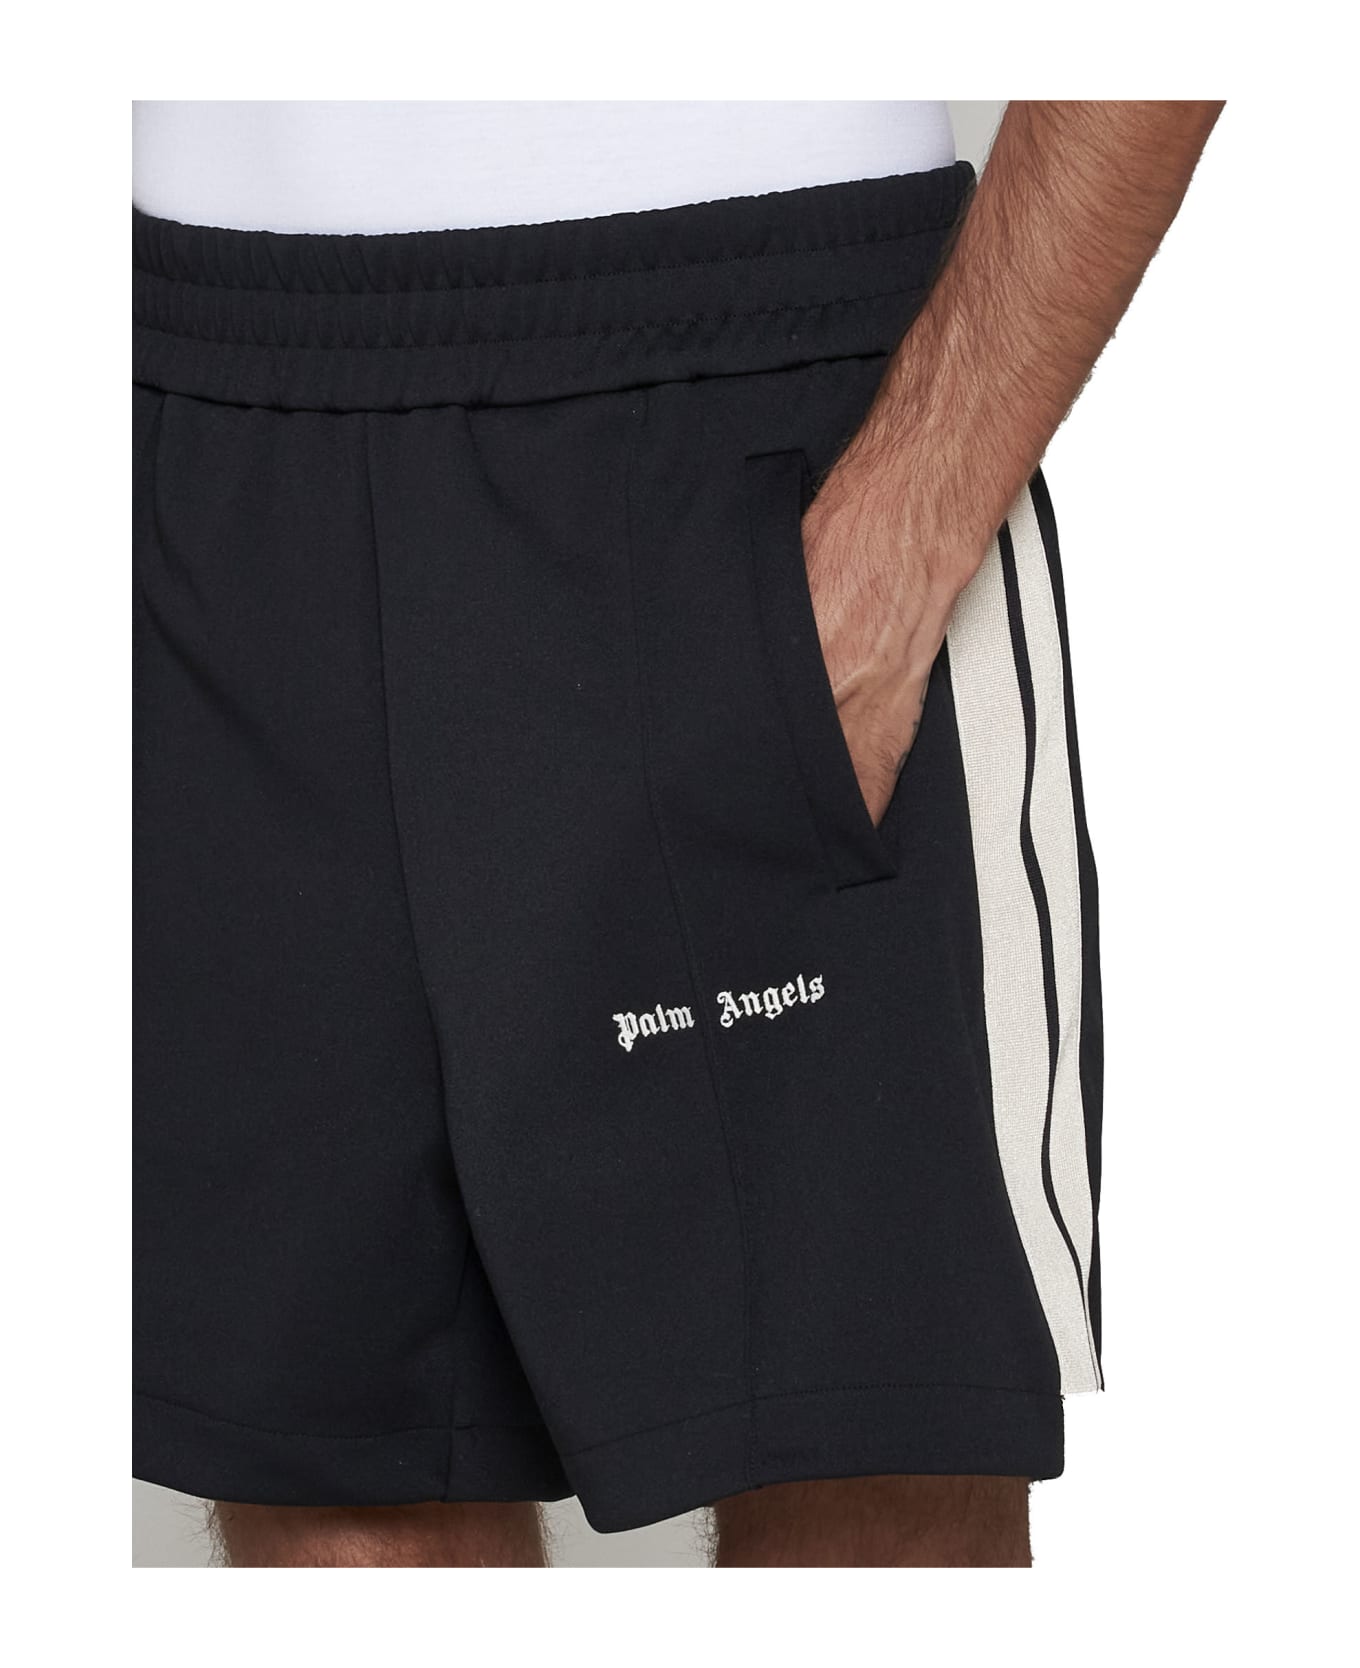 Palm Angels Bermuda Shorts - Black